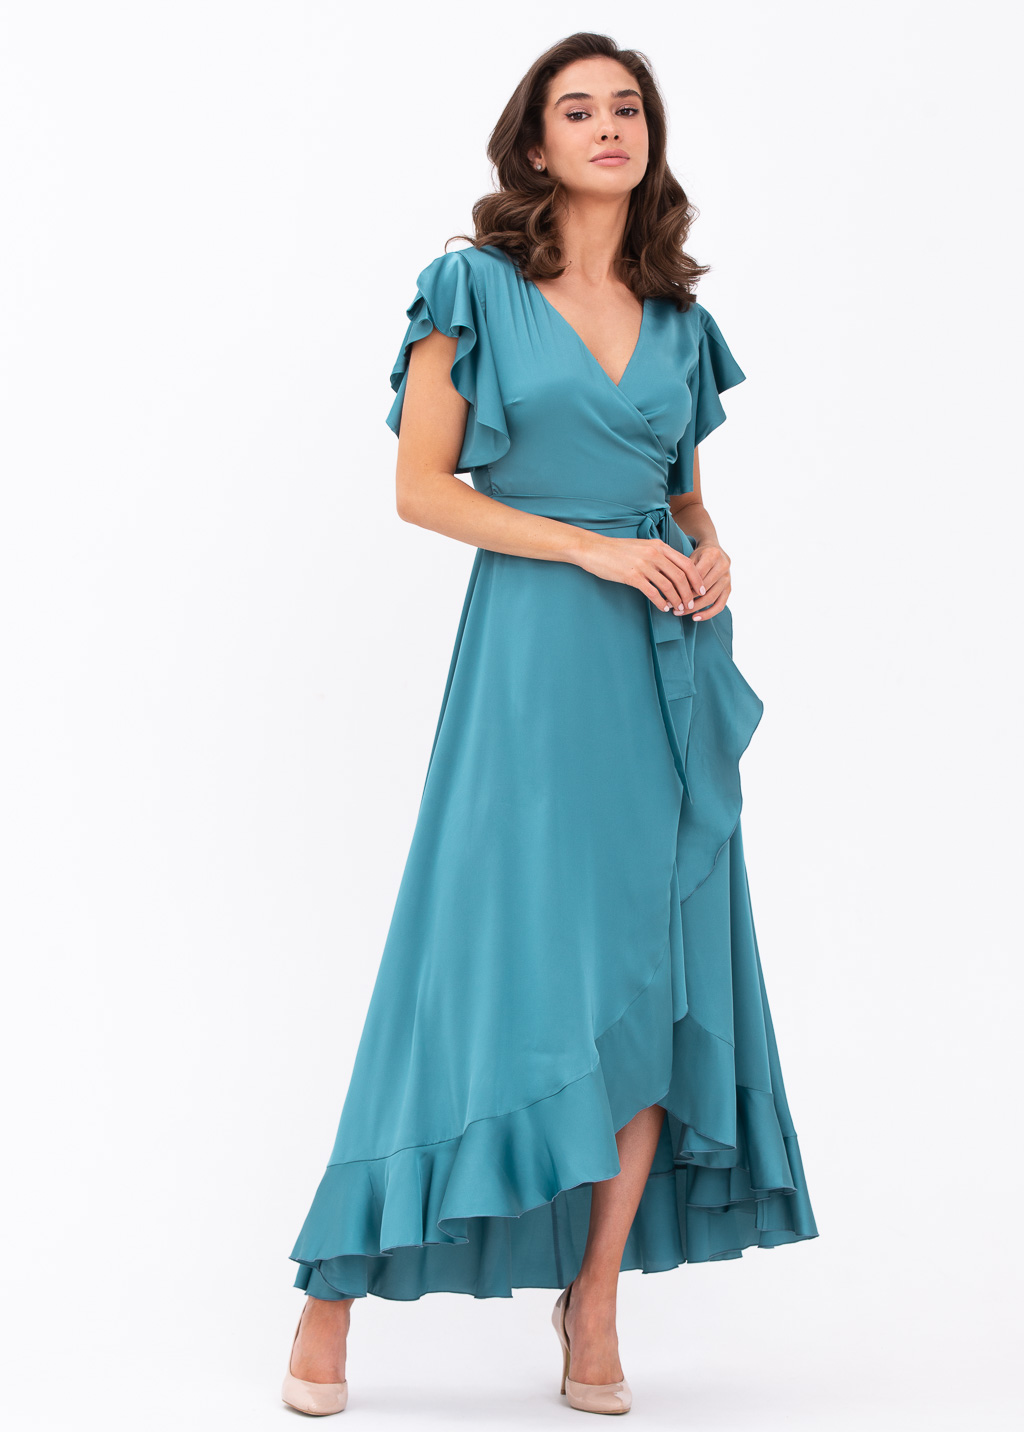 Aqua blue wrap dress